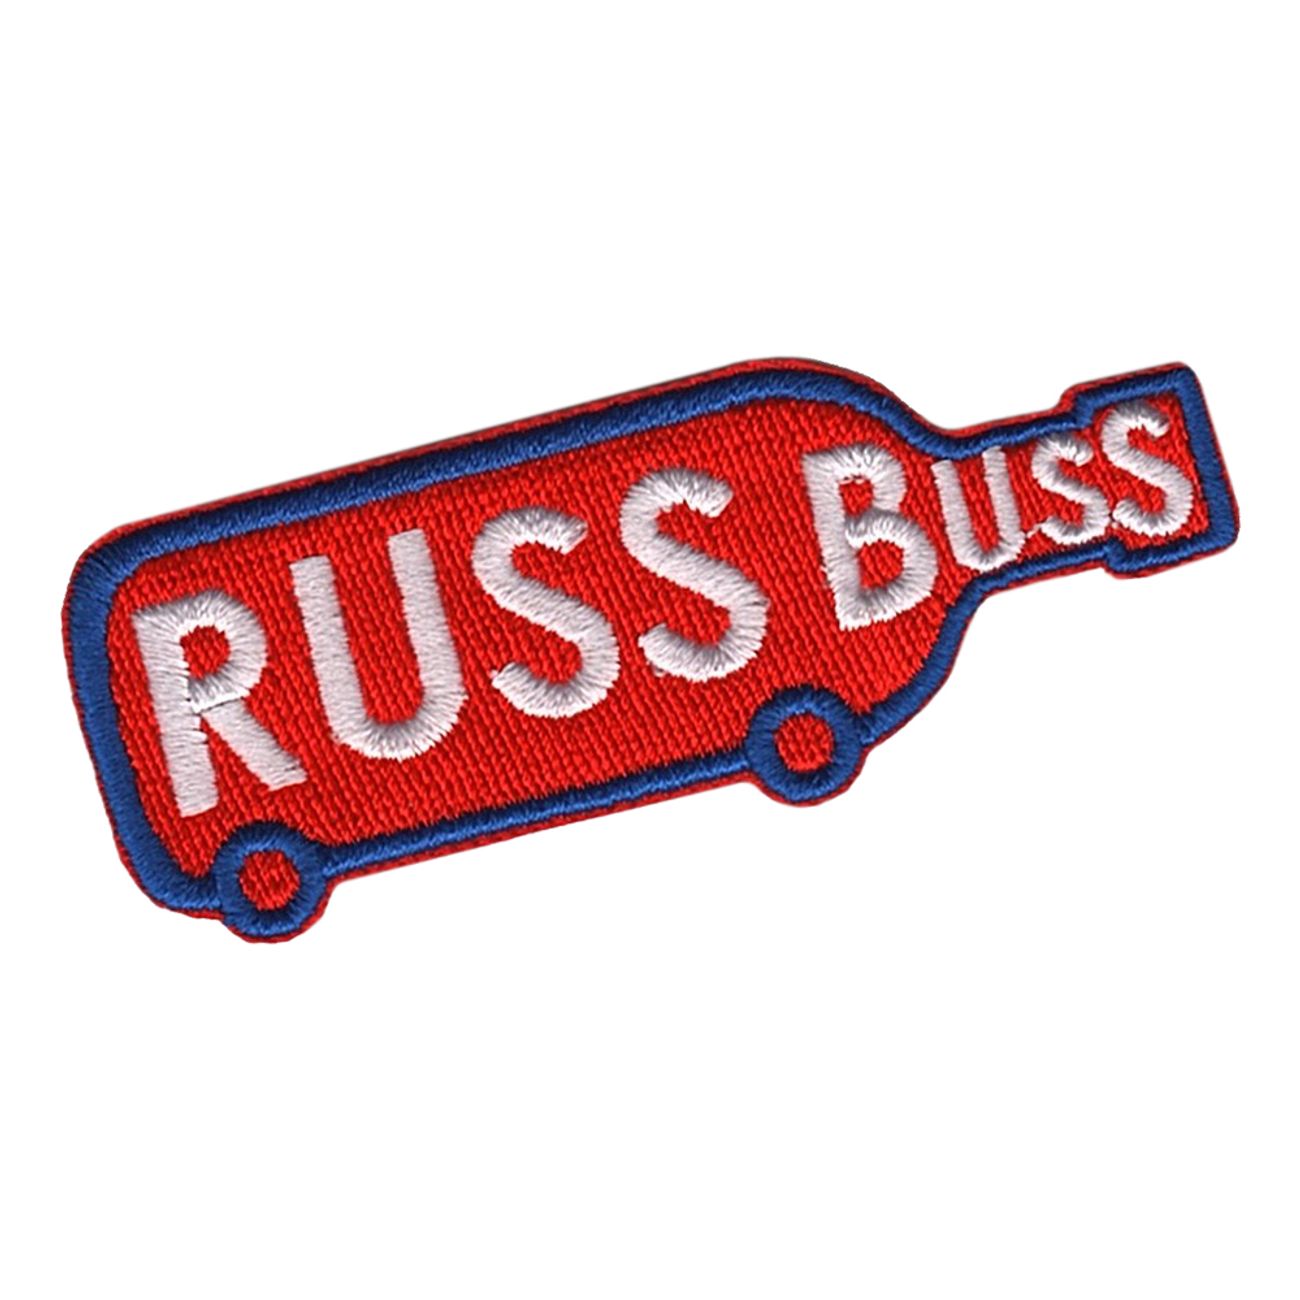 russ-buss-tygmarke-100828-1